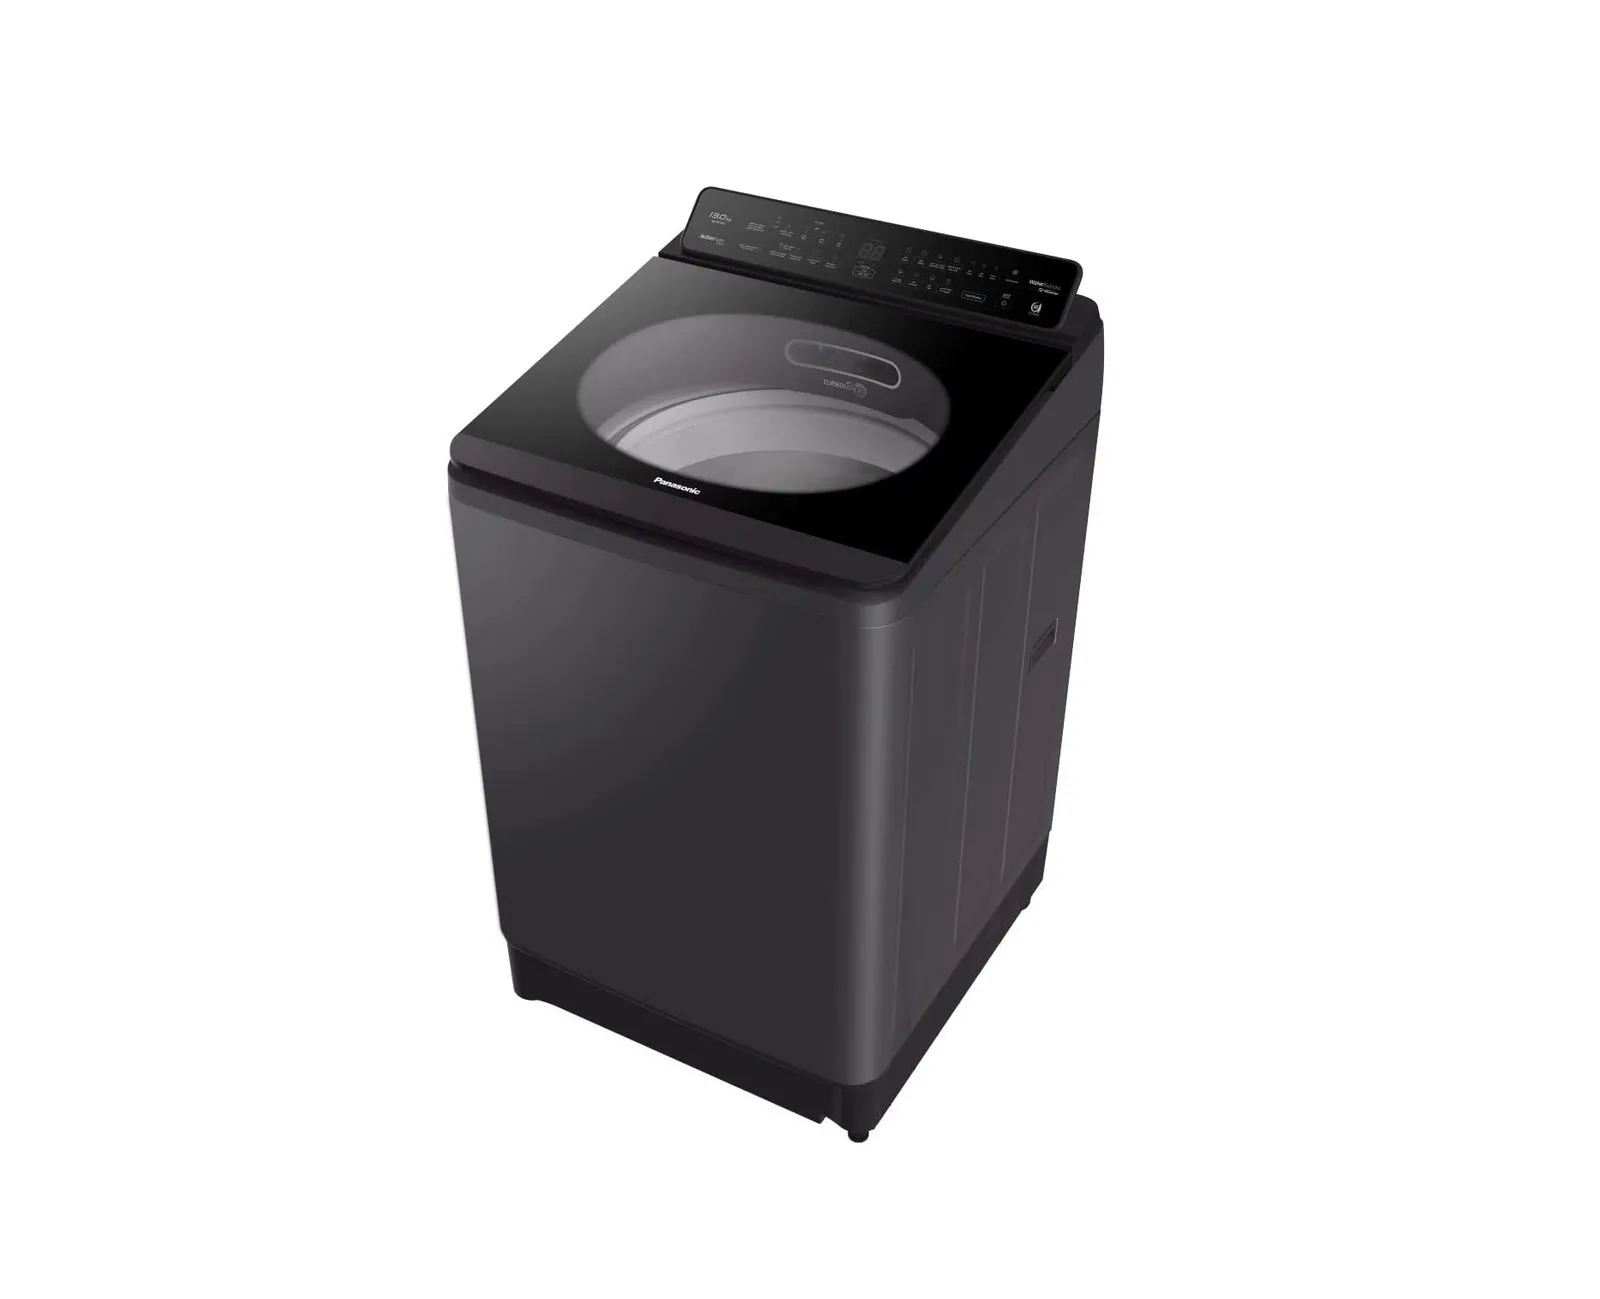 Panasonic 13 kg Top Load Washing Machine Black Model NA-FD13X1 | 1 Year Warranty